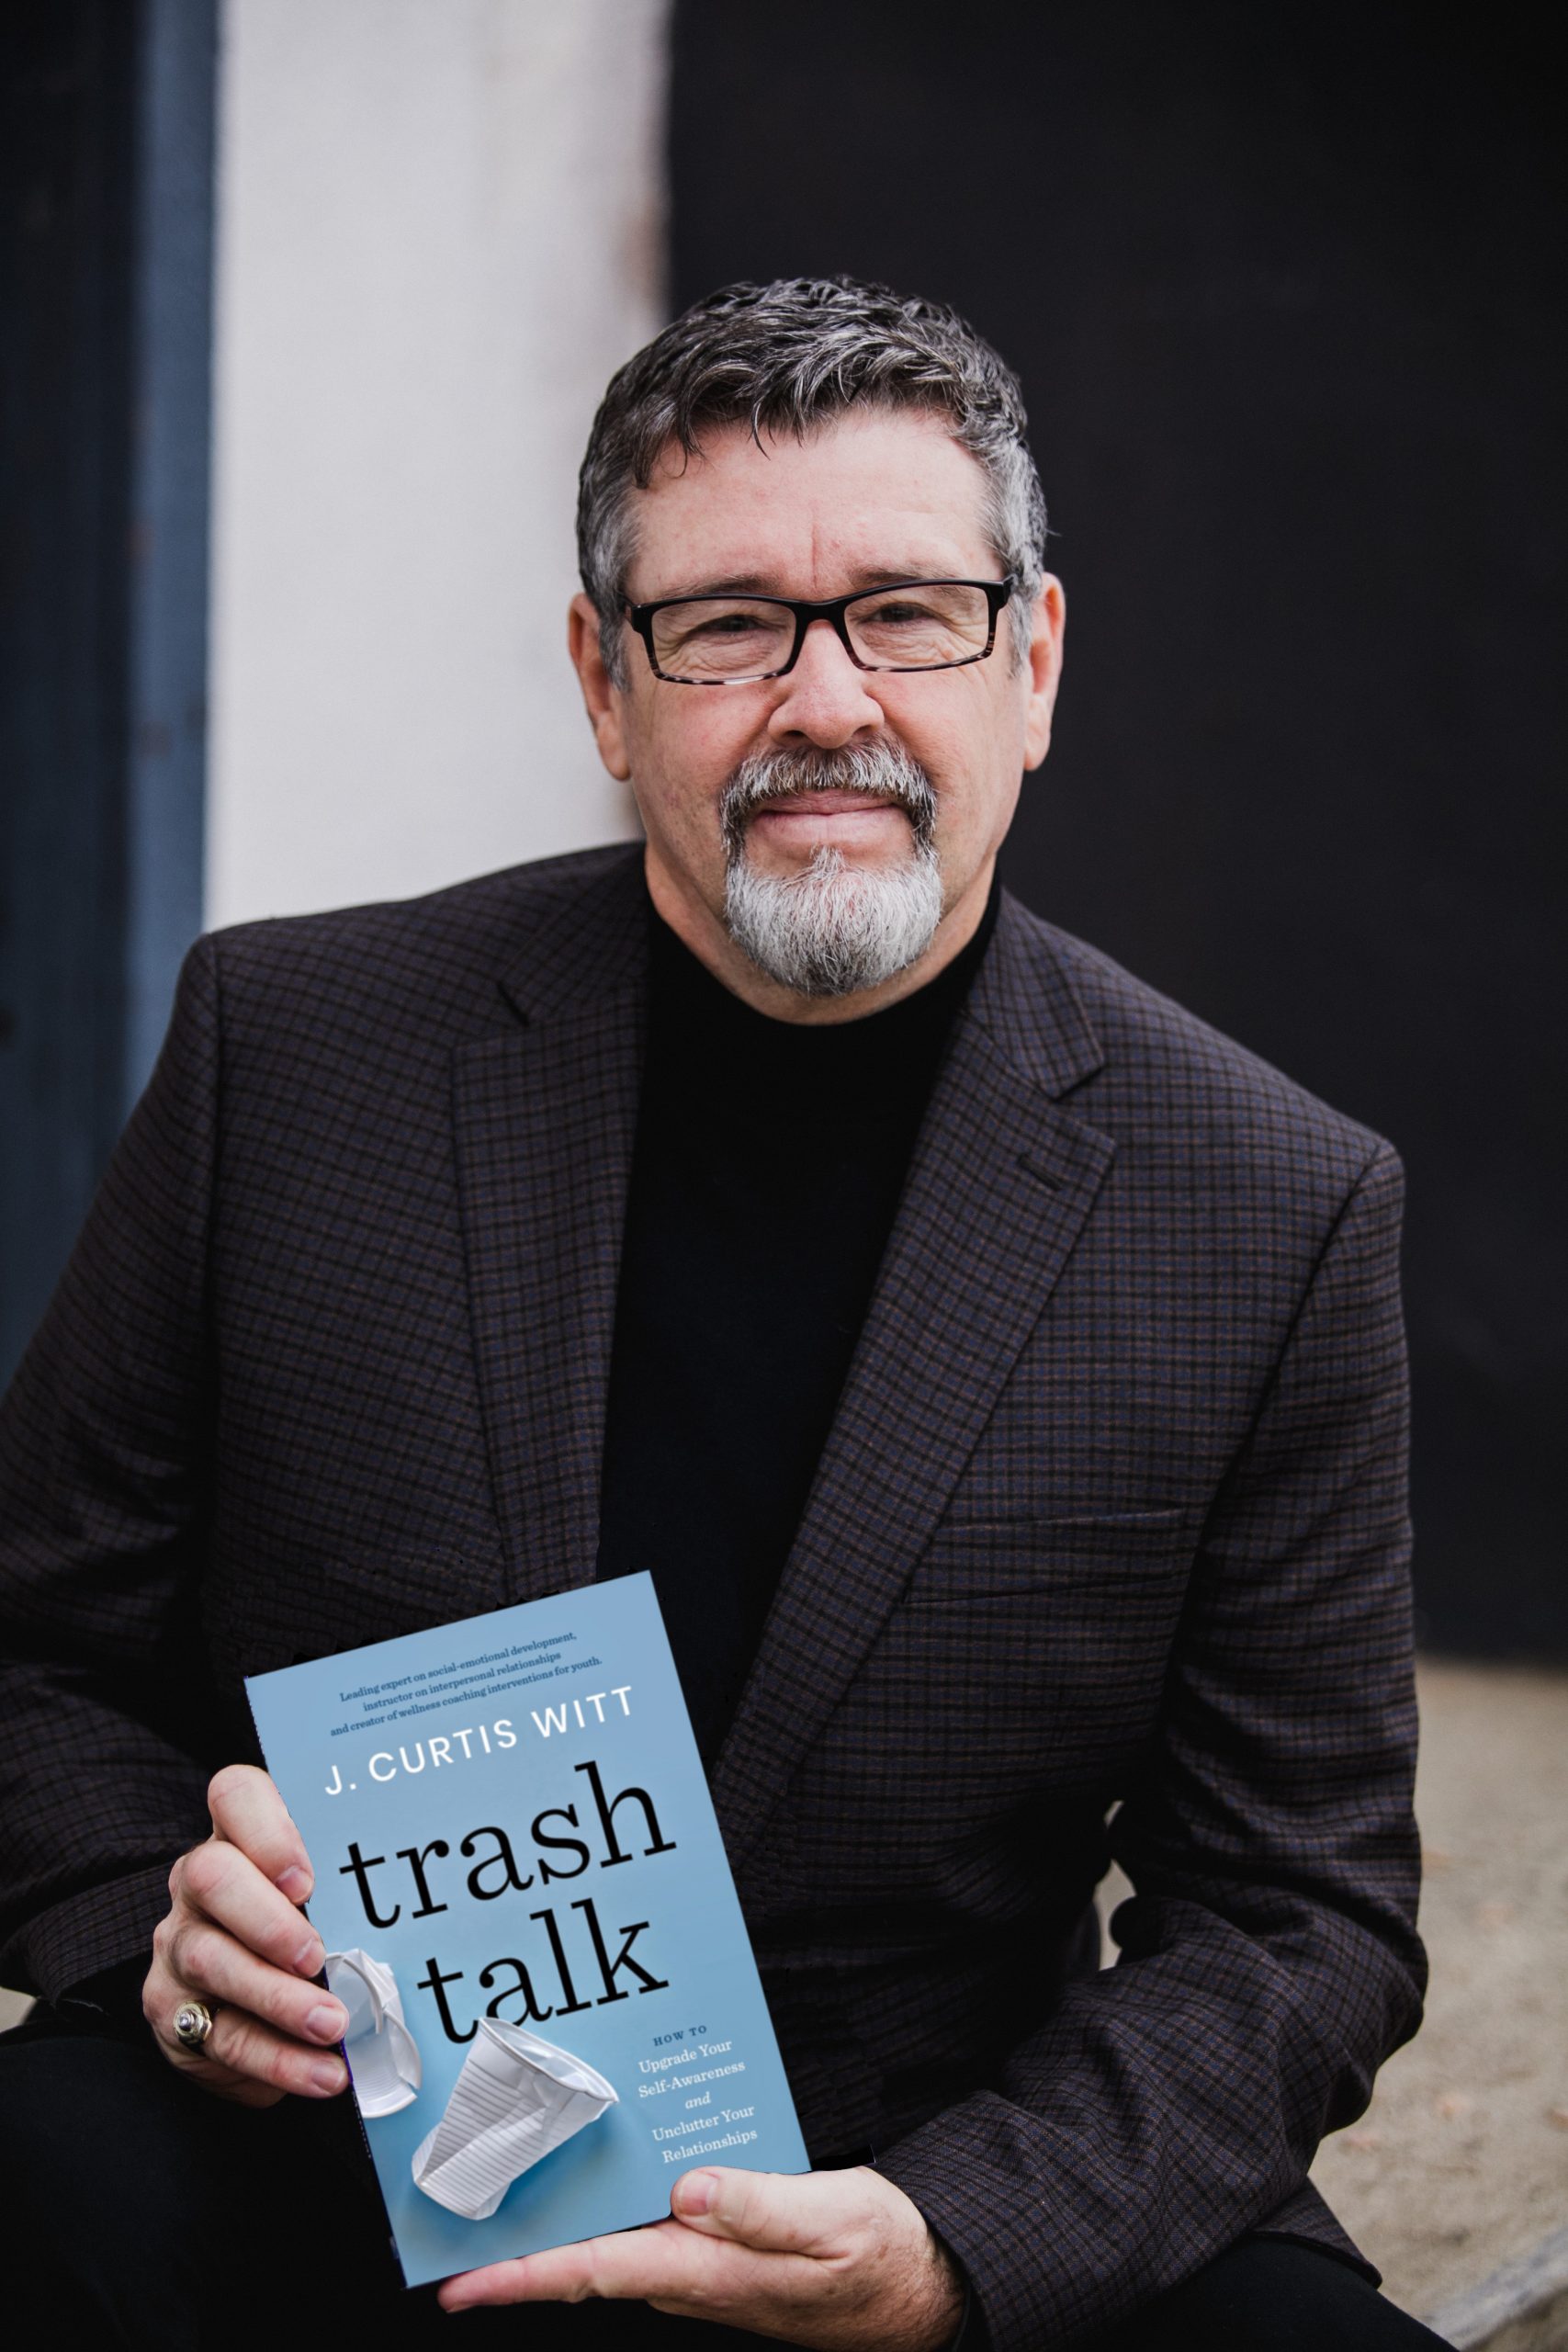 Photo of Jack holding trash talk book